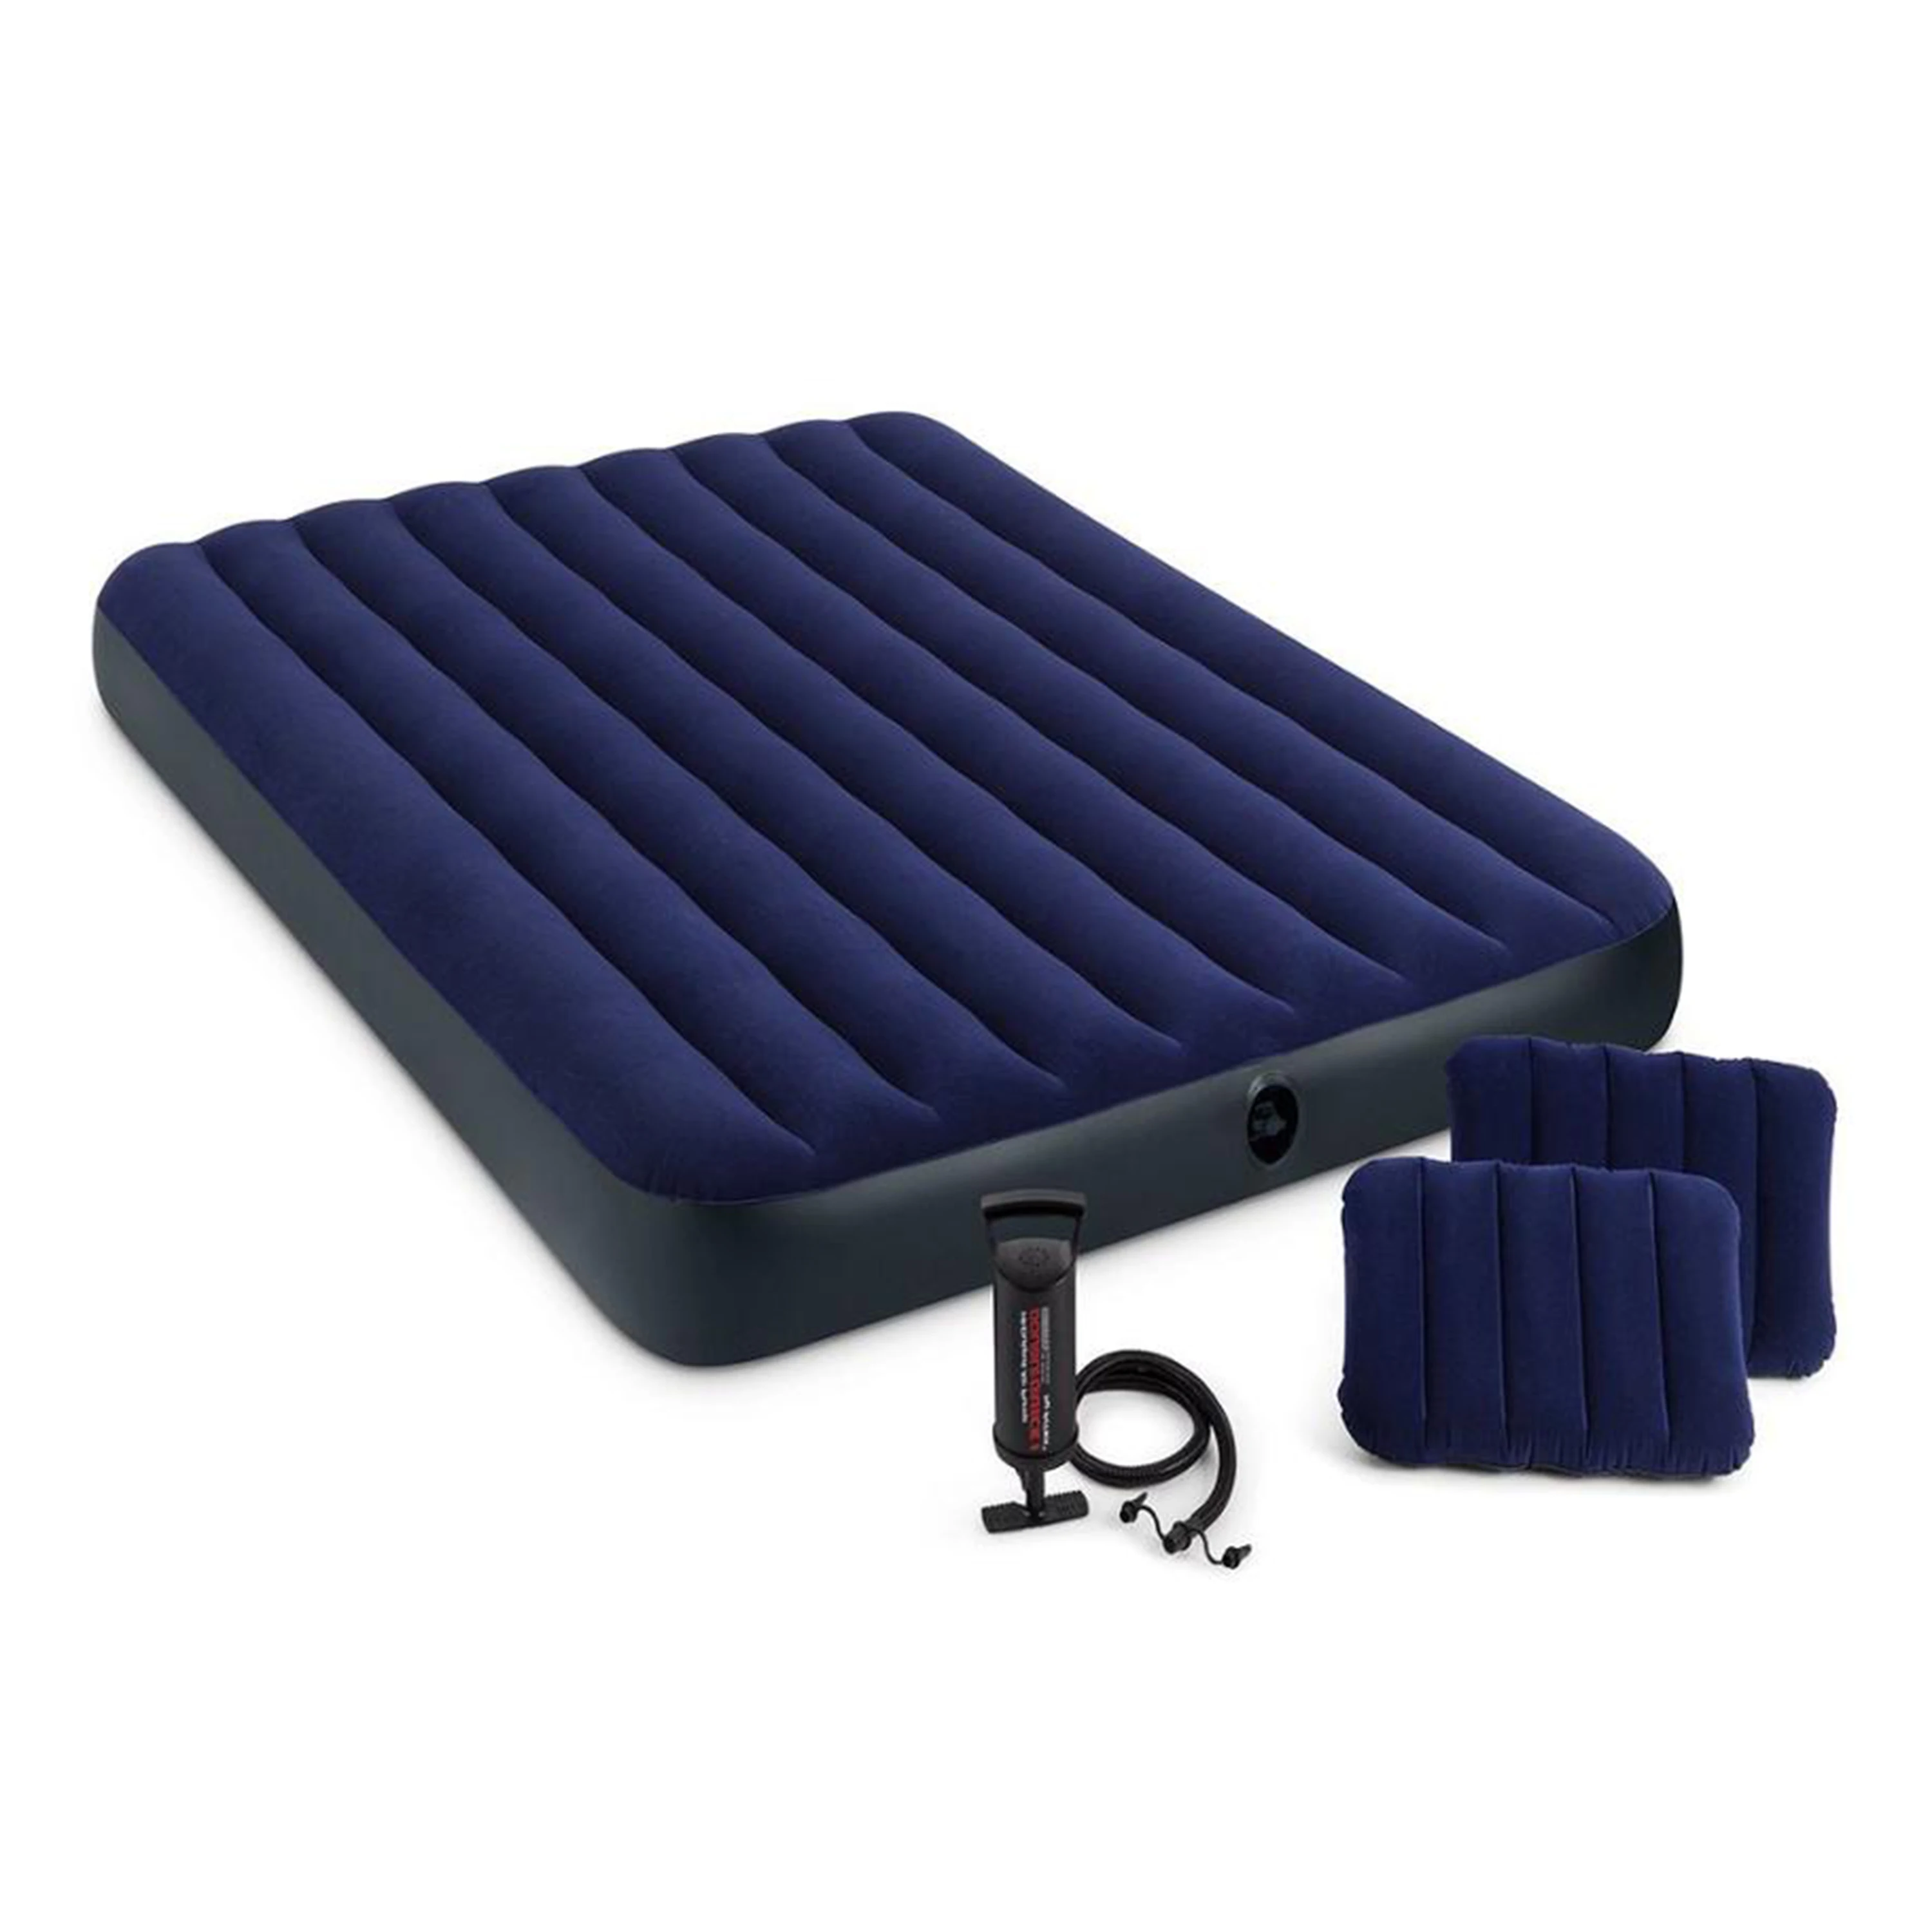 

Intex series 64755 Folding outdoor camping large air mattress bed king size mattress